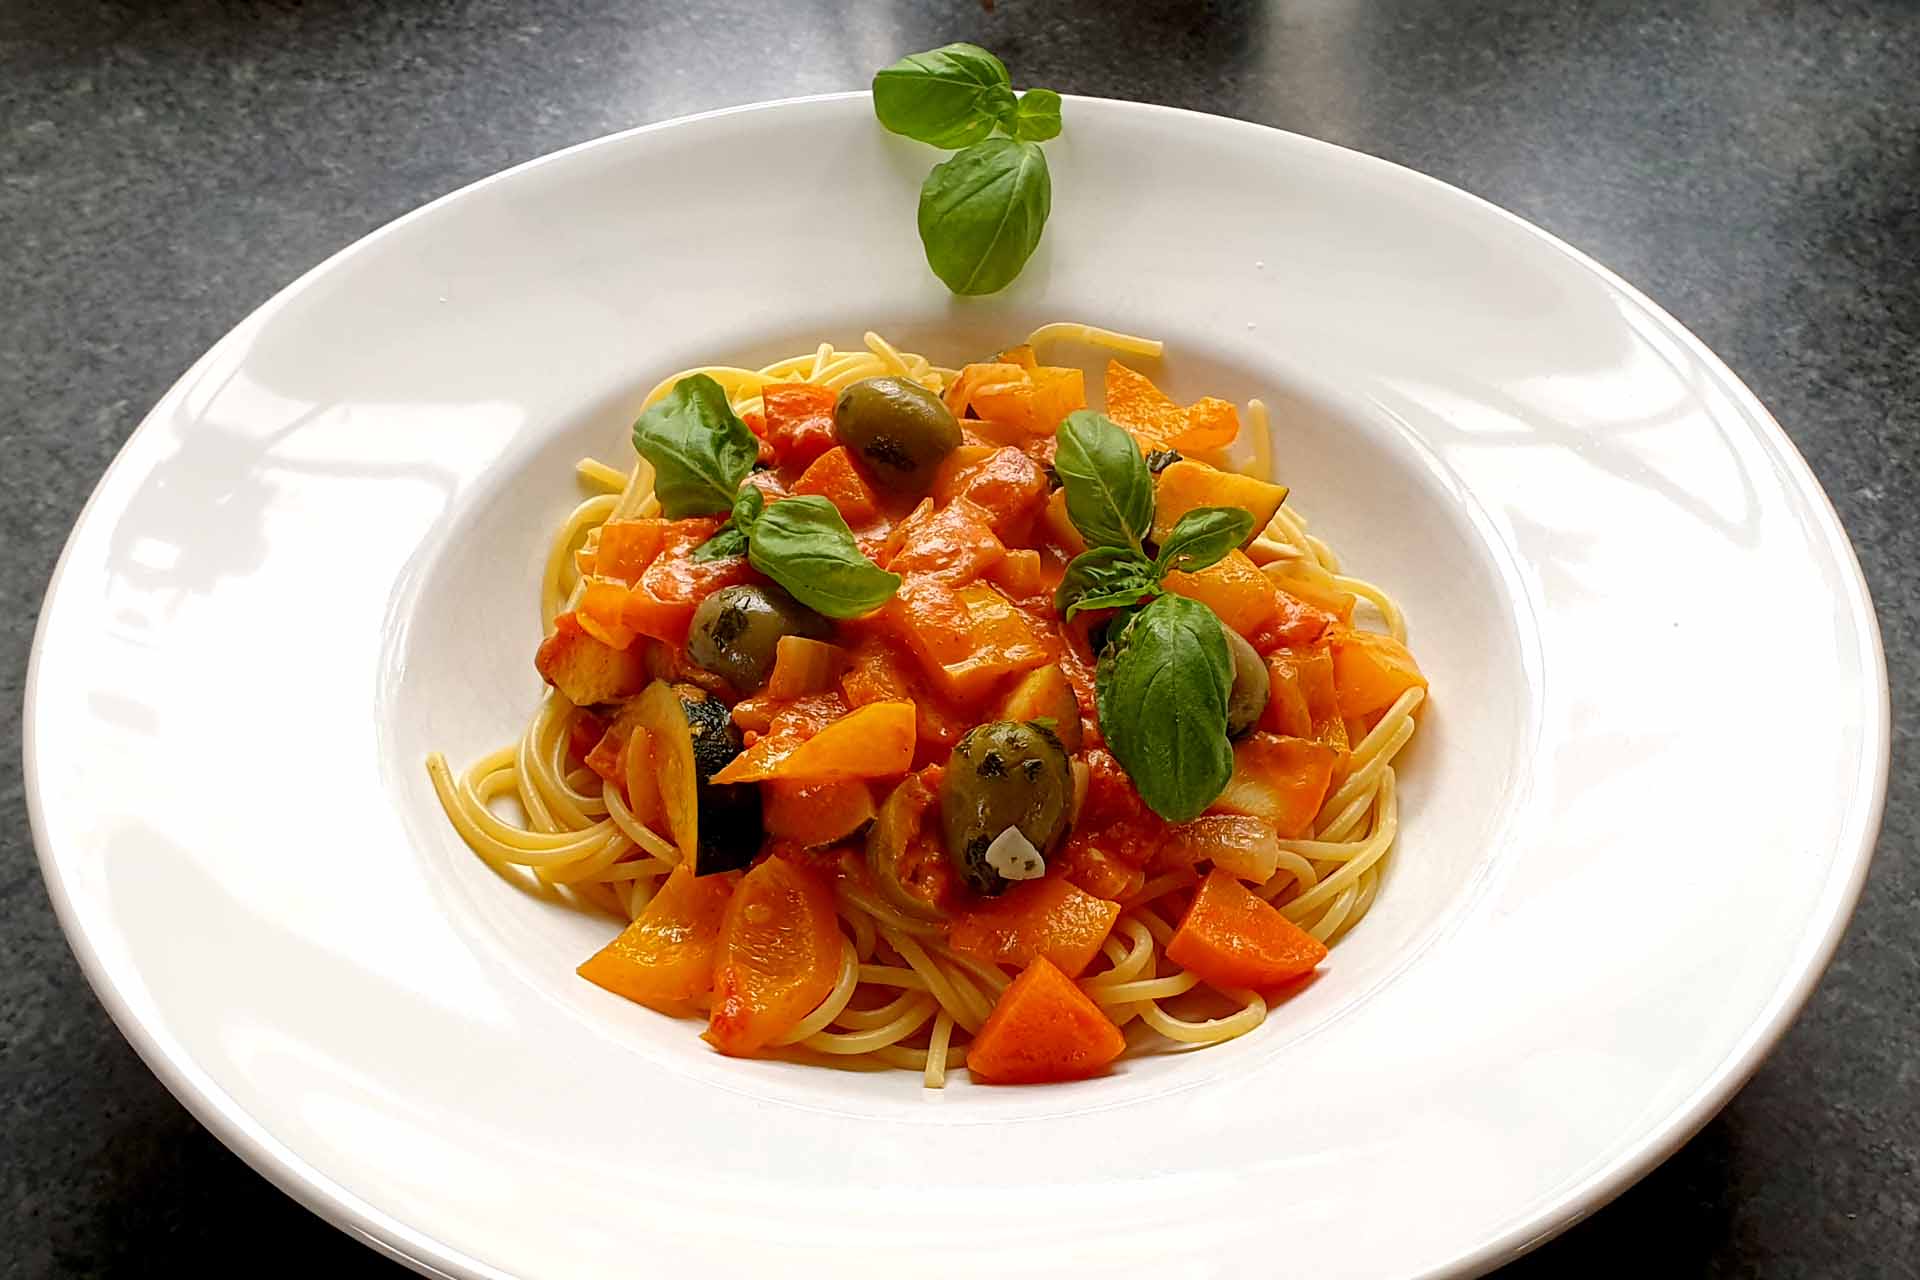 Spaghetti with vegetables in creamy tomato sauce - delicious